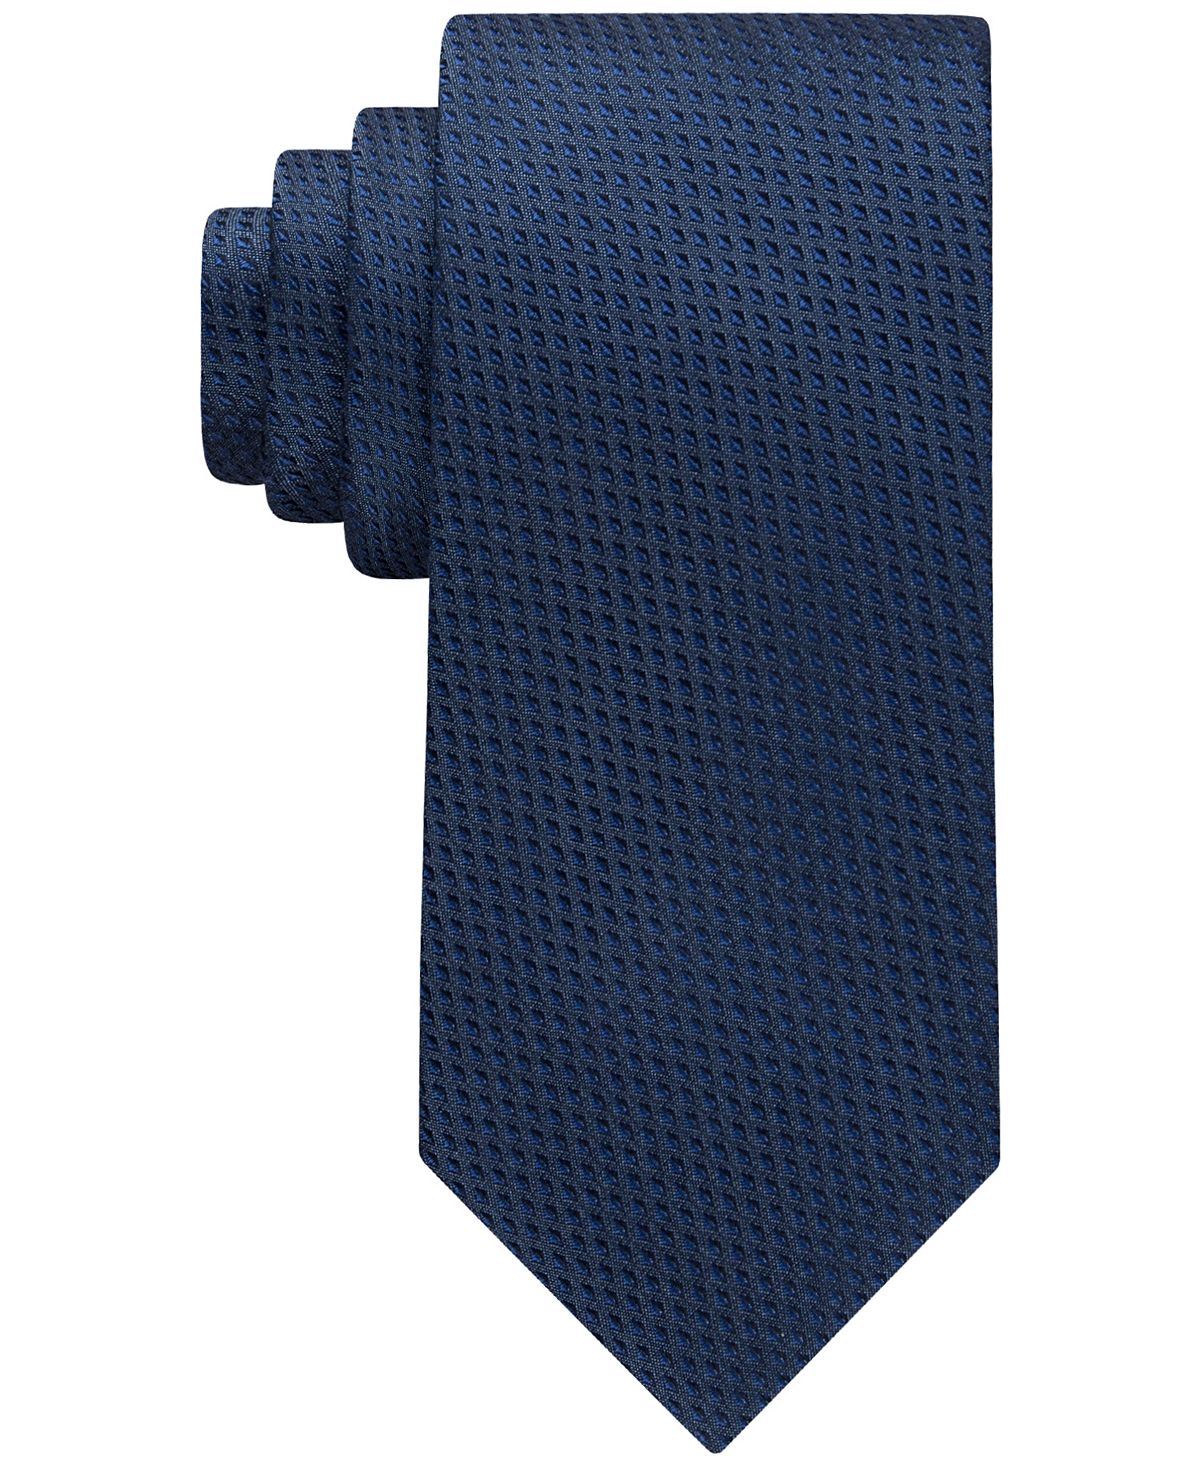 Мужской галстук с микробриллиантами Calvin Klein темный мужской галстук calvin klein 2108